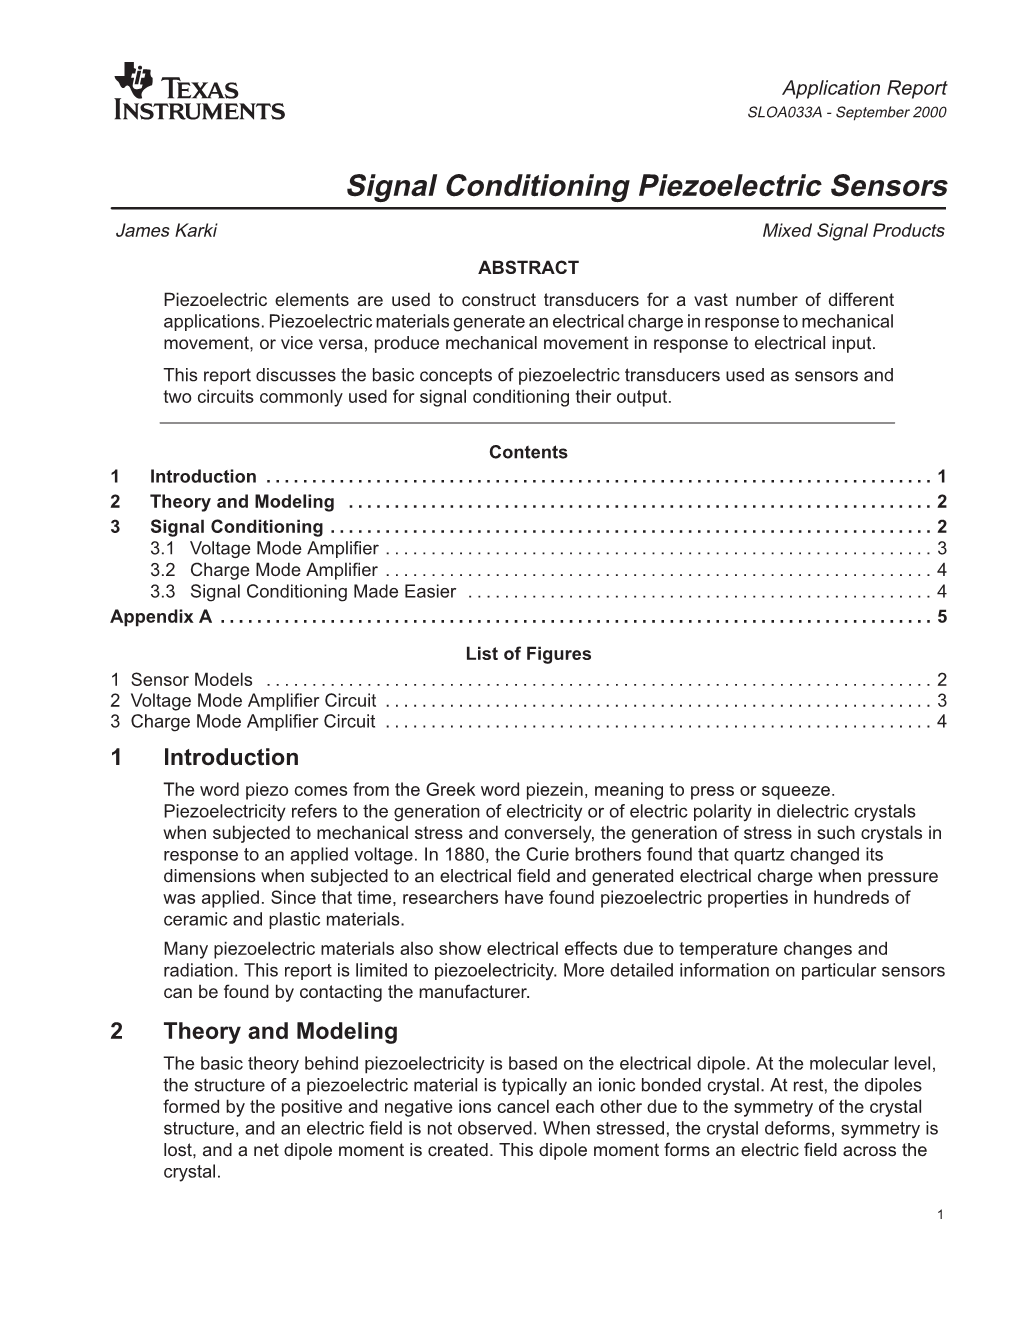 "Signal Conditioning Piezoelectric Sensors"